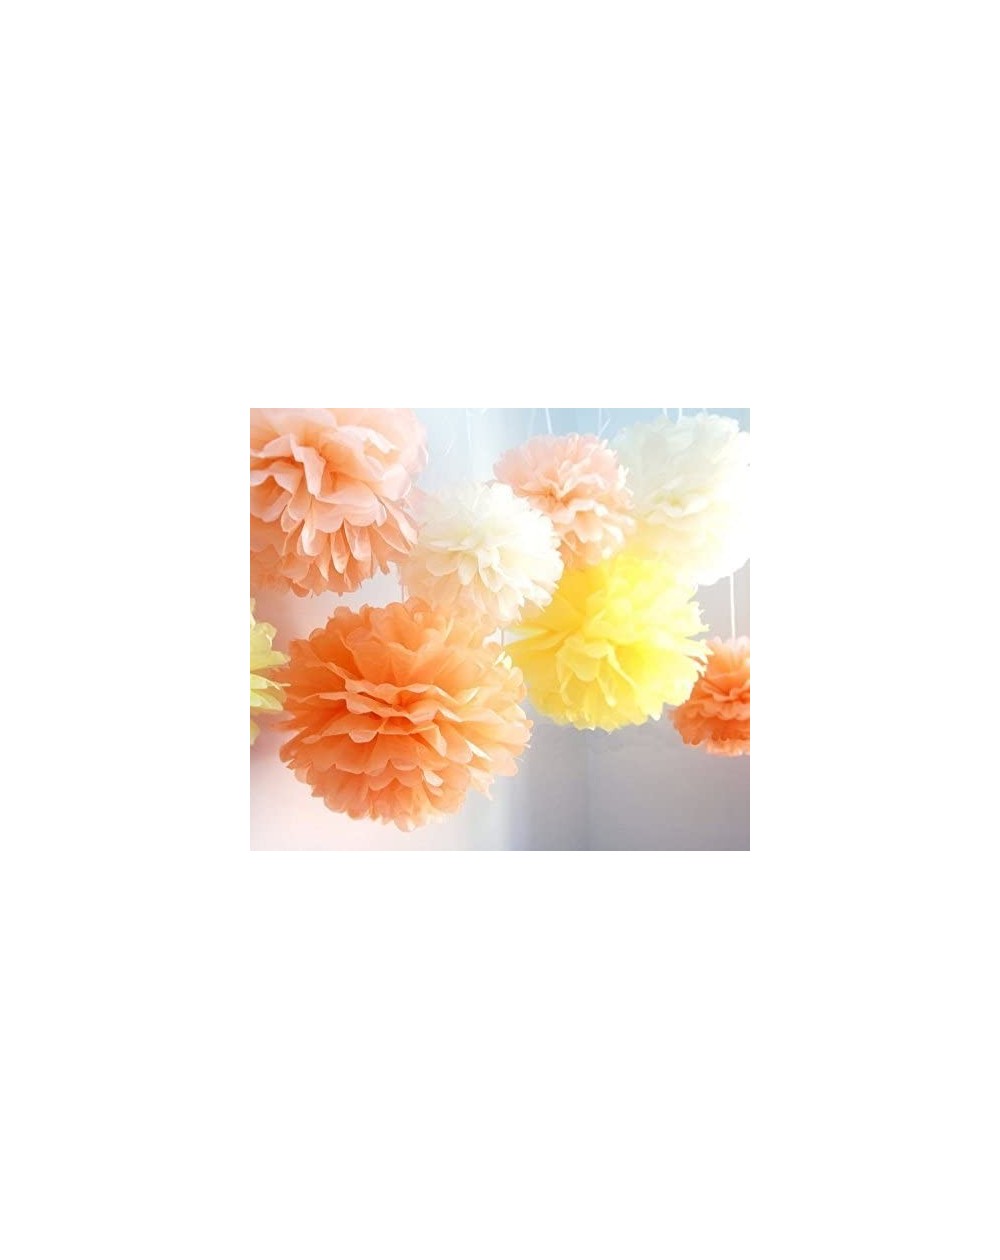 Tissue Pom Poms Pack of 8PCS Mixed Sizes 4 Colors Tissue Flower Pom Poms Pompoms Wedding Party Garland Bridal Shower Birthday...